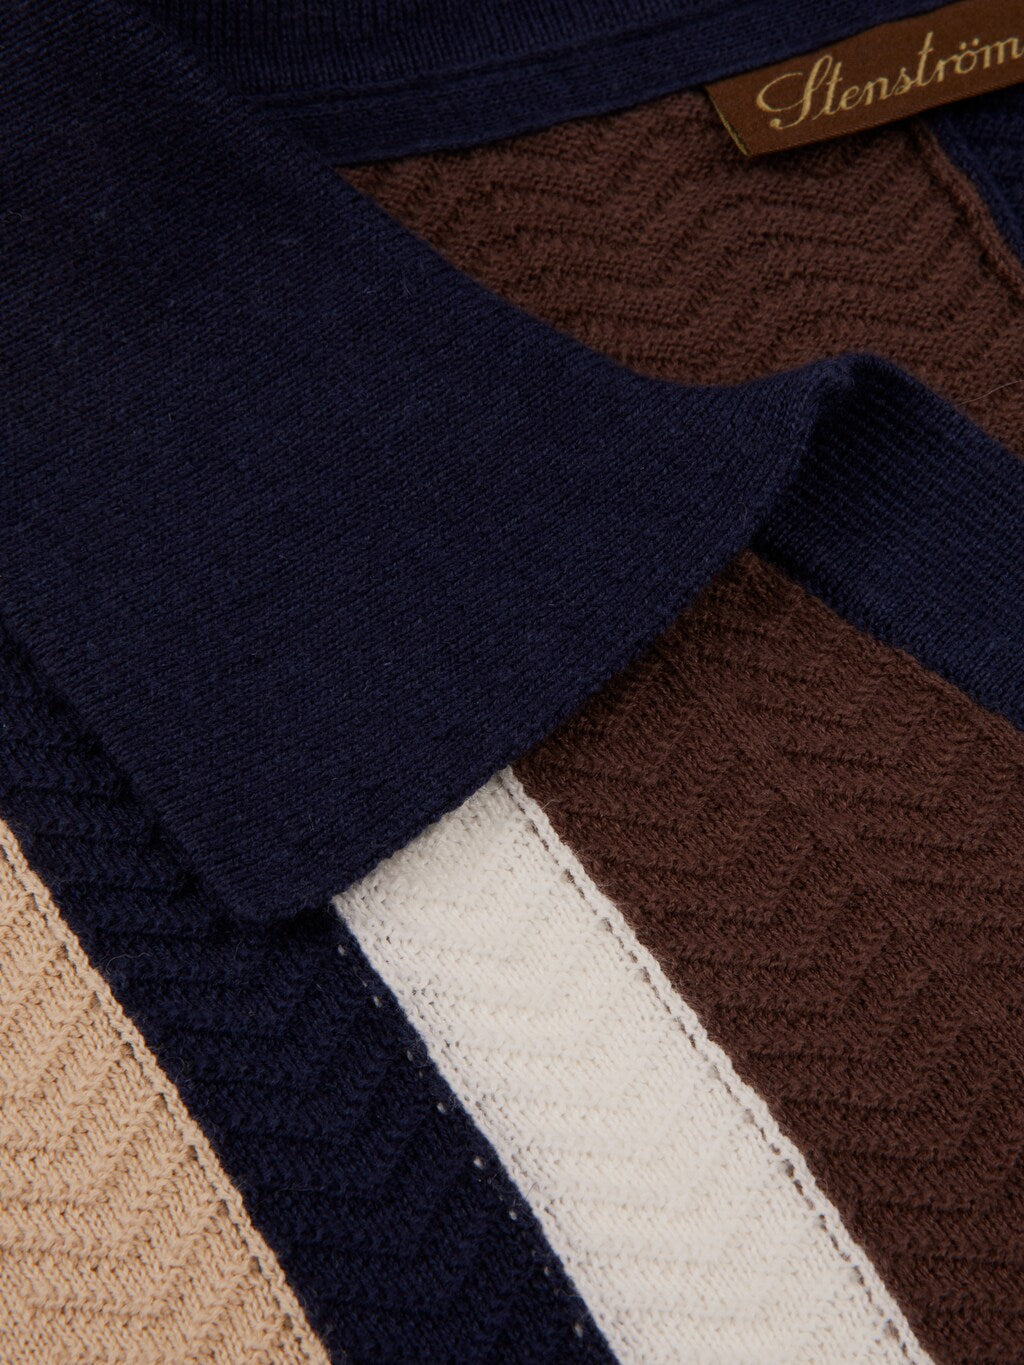 Blue Textured Striped Linen/Cotton Polo Shirt